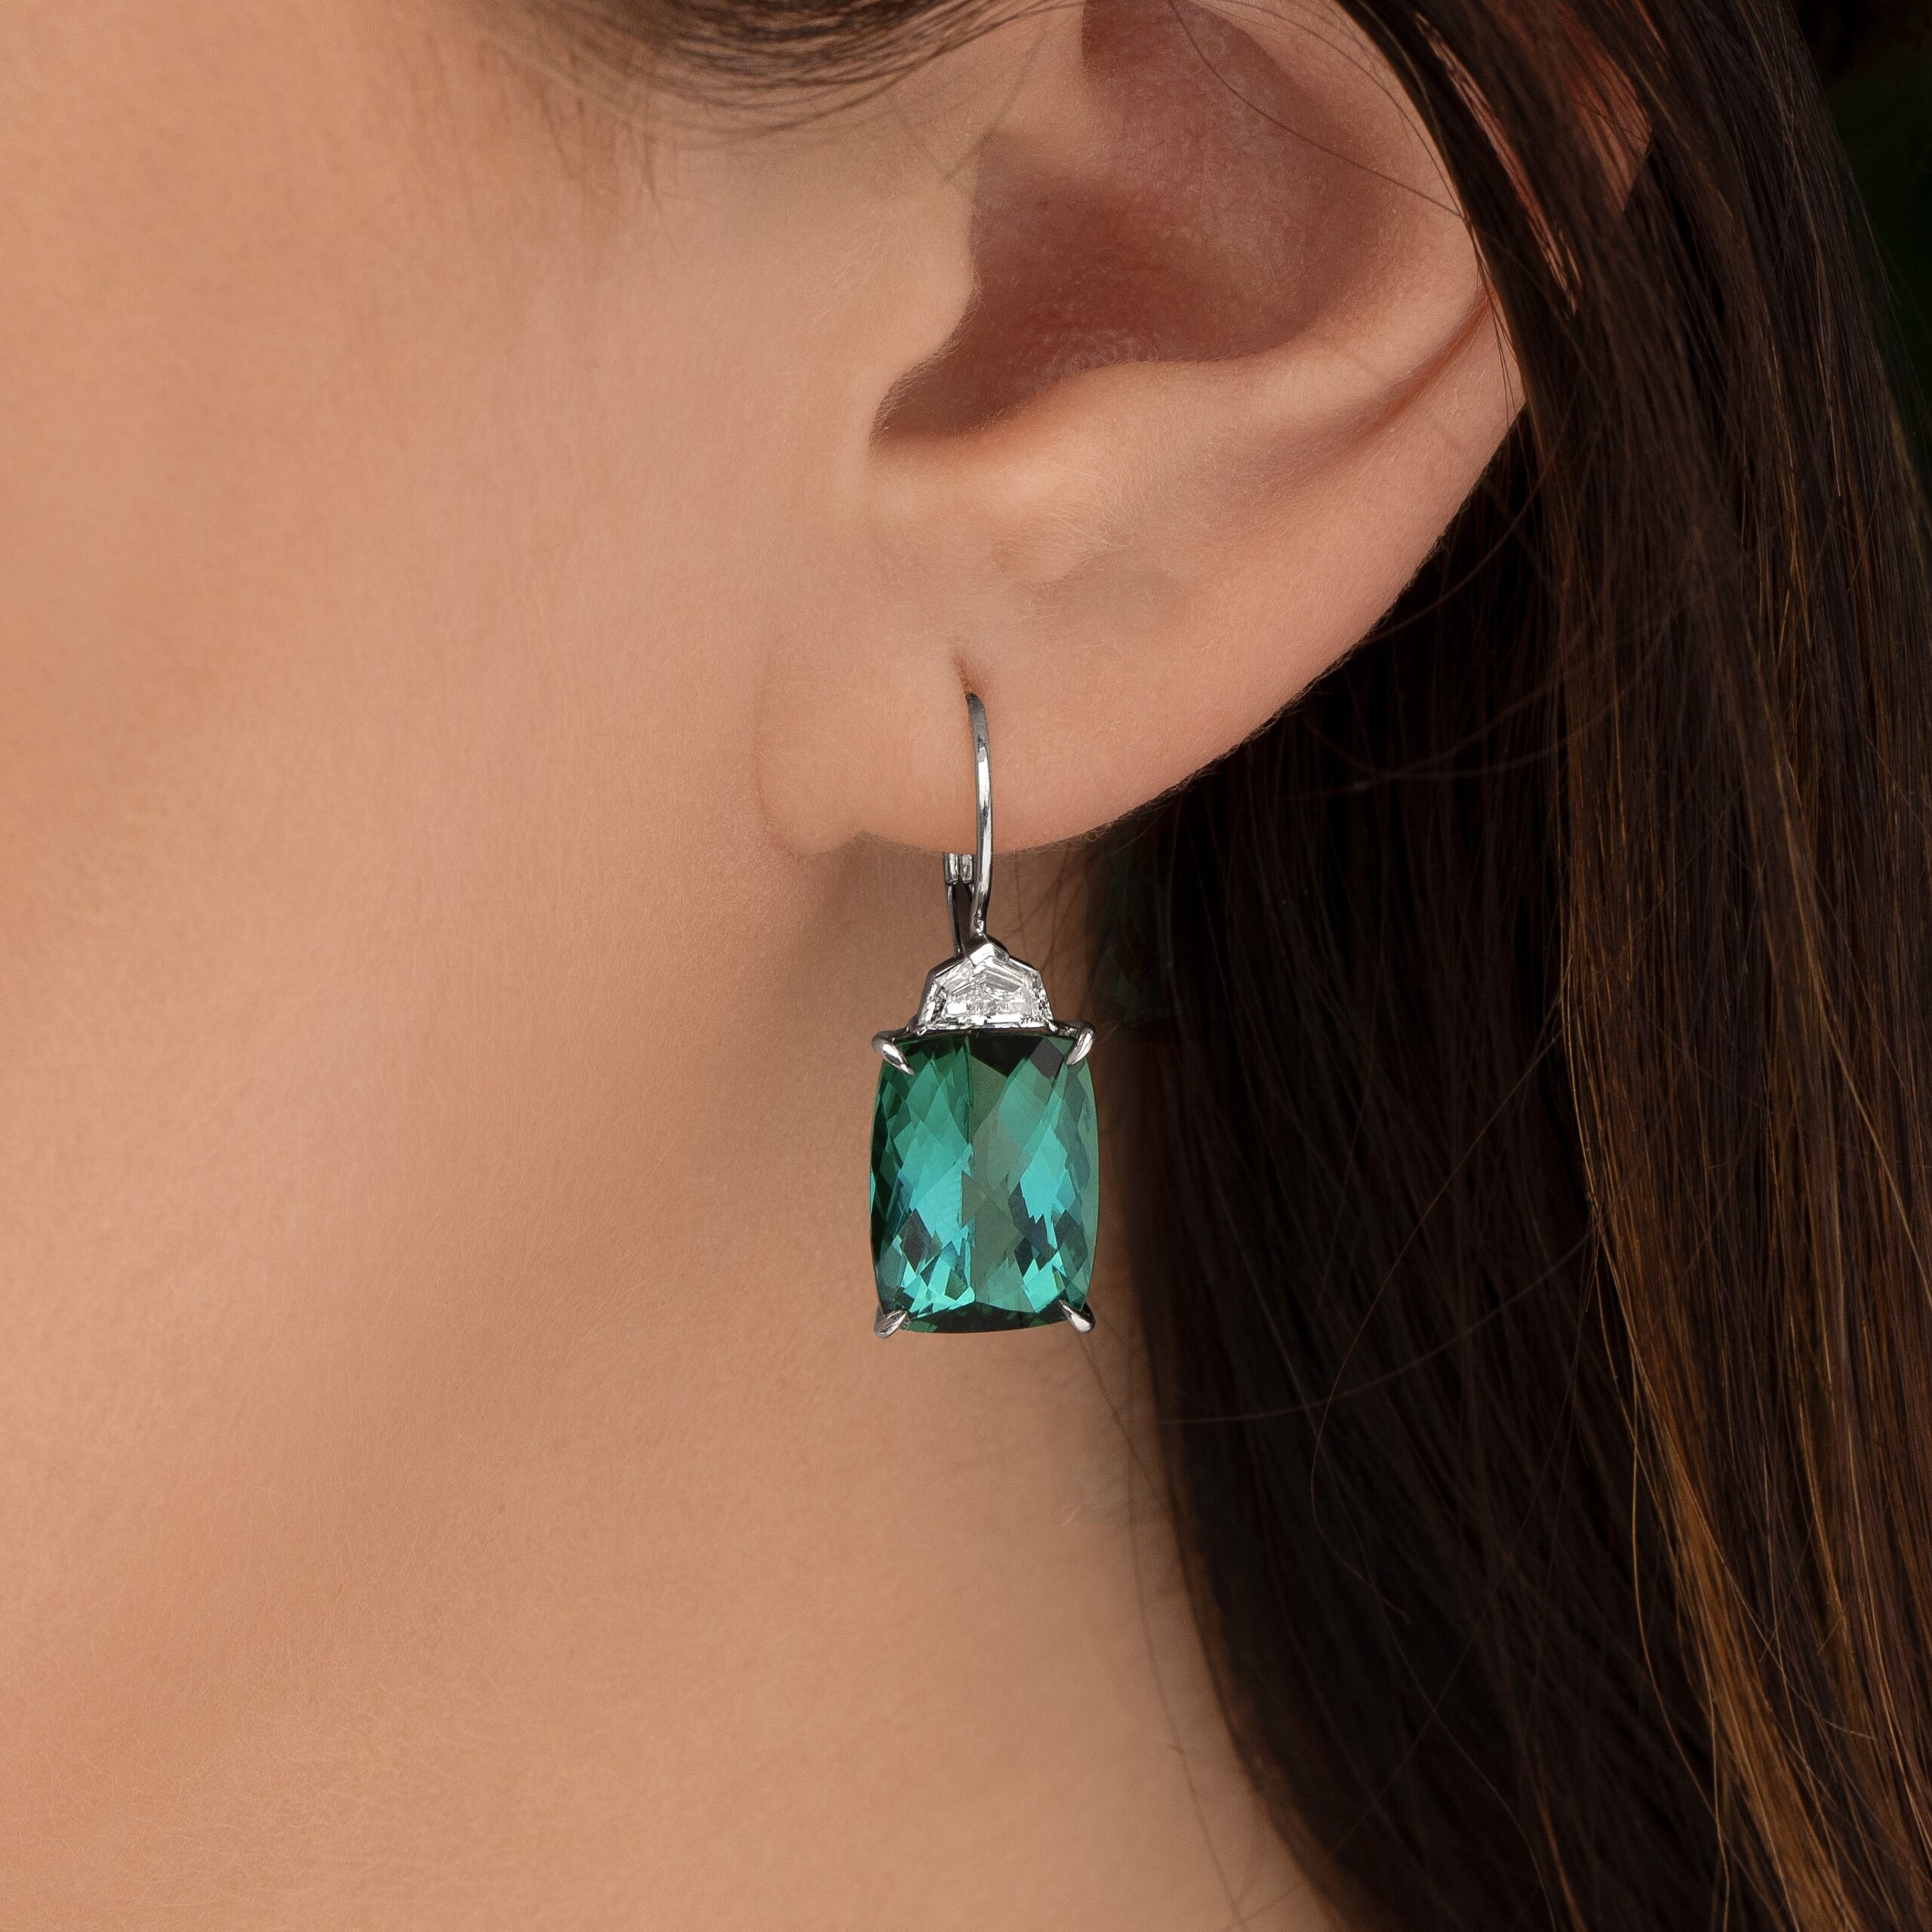 Share more than 87 chrome tourmaline earrings - esthdonghoadian